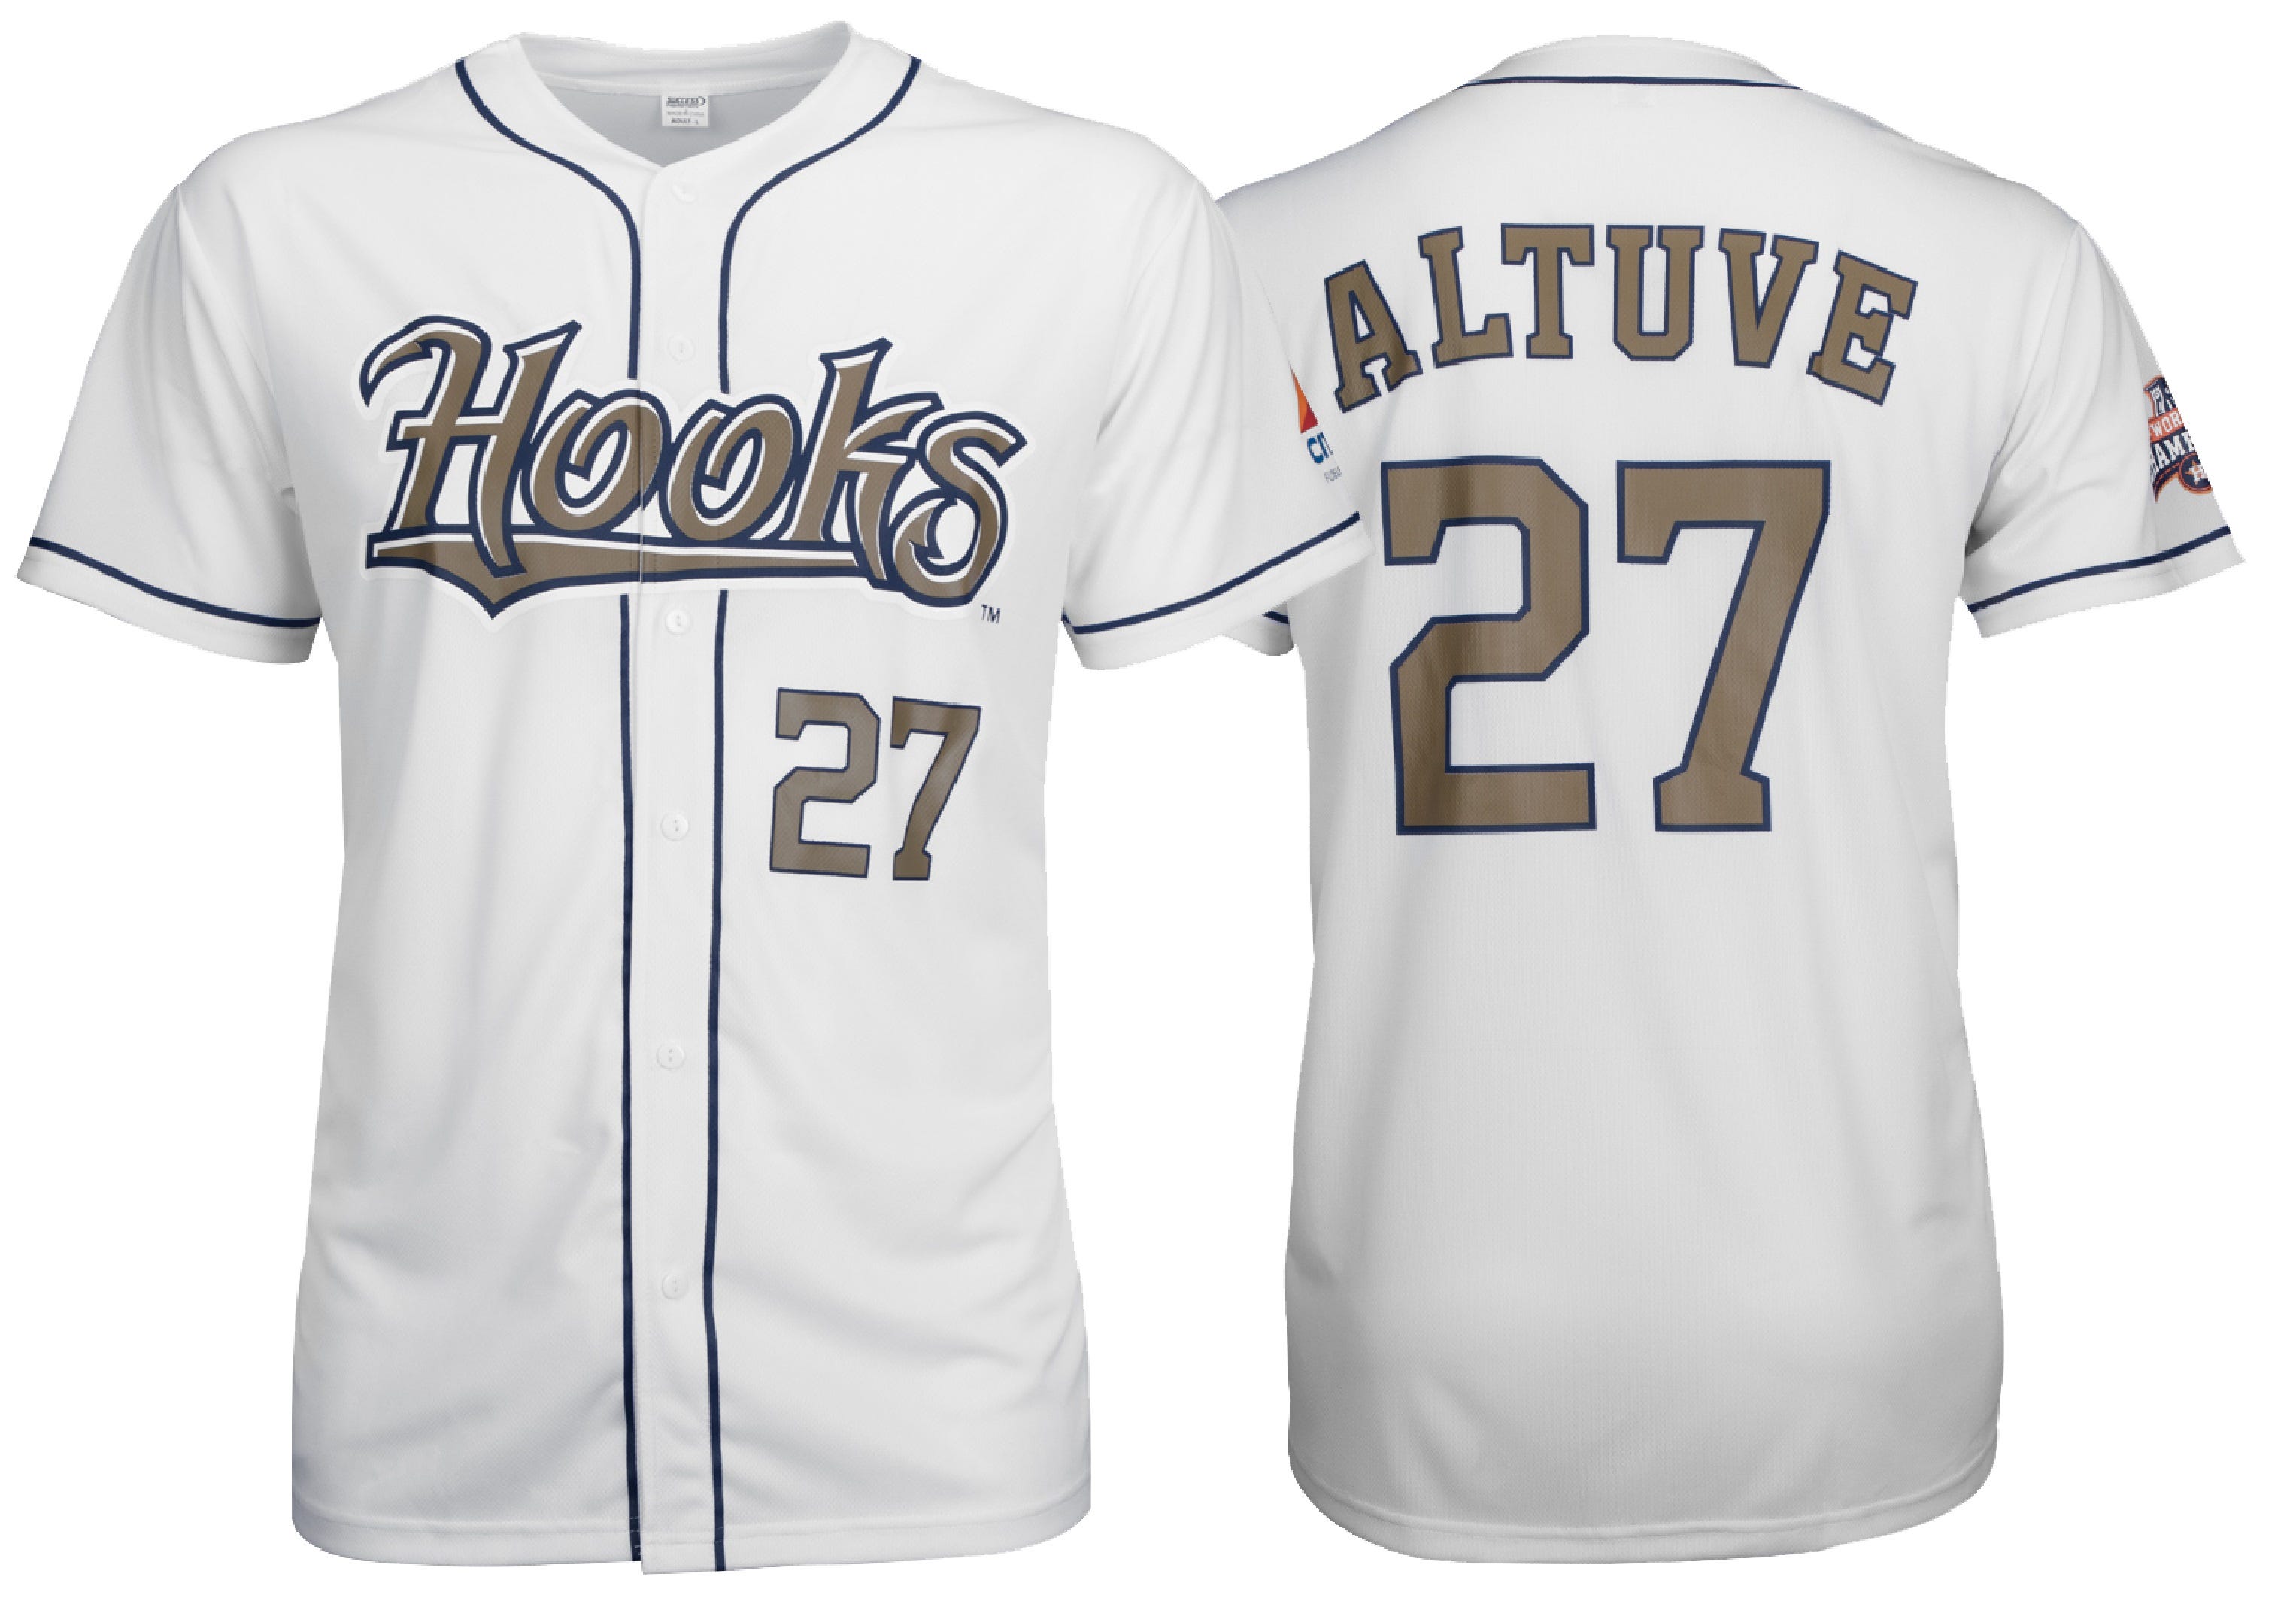 Hooks announce Altuve jersey giveaway 